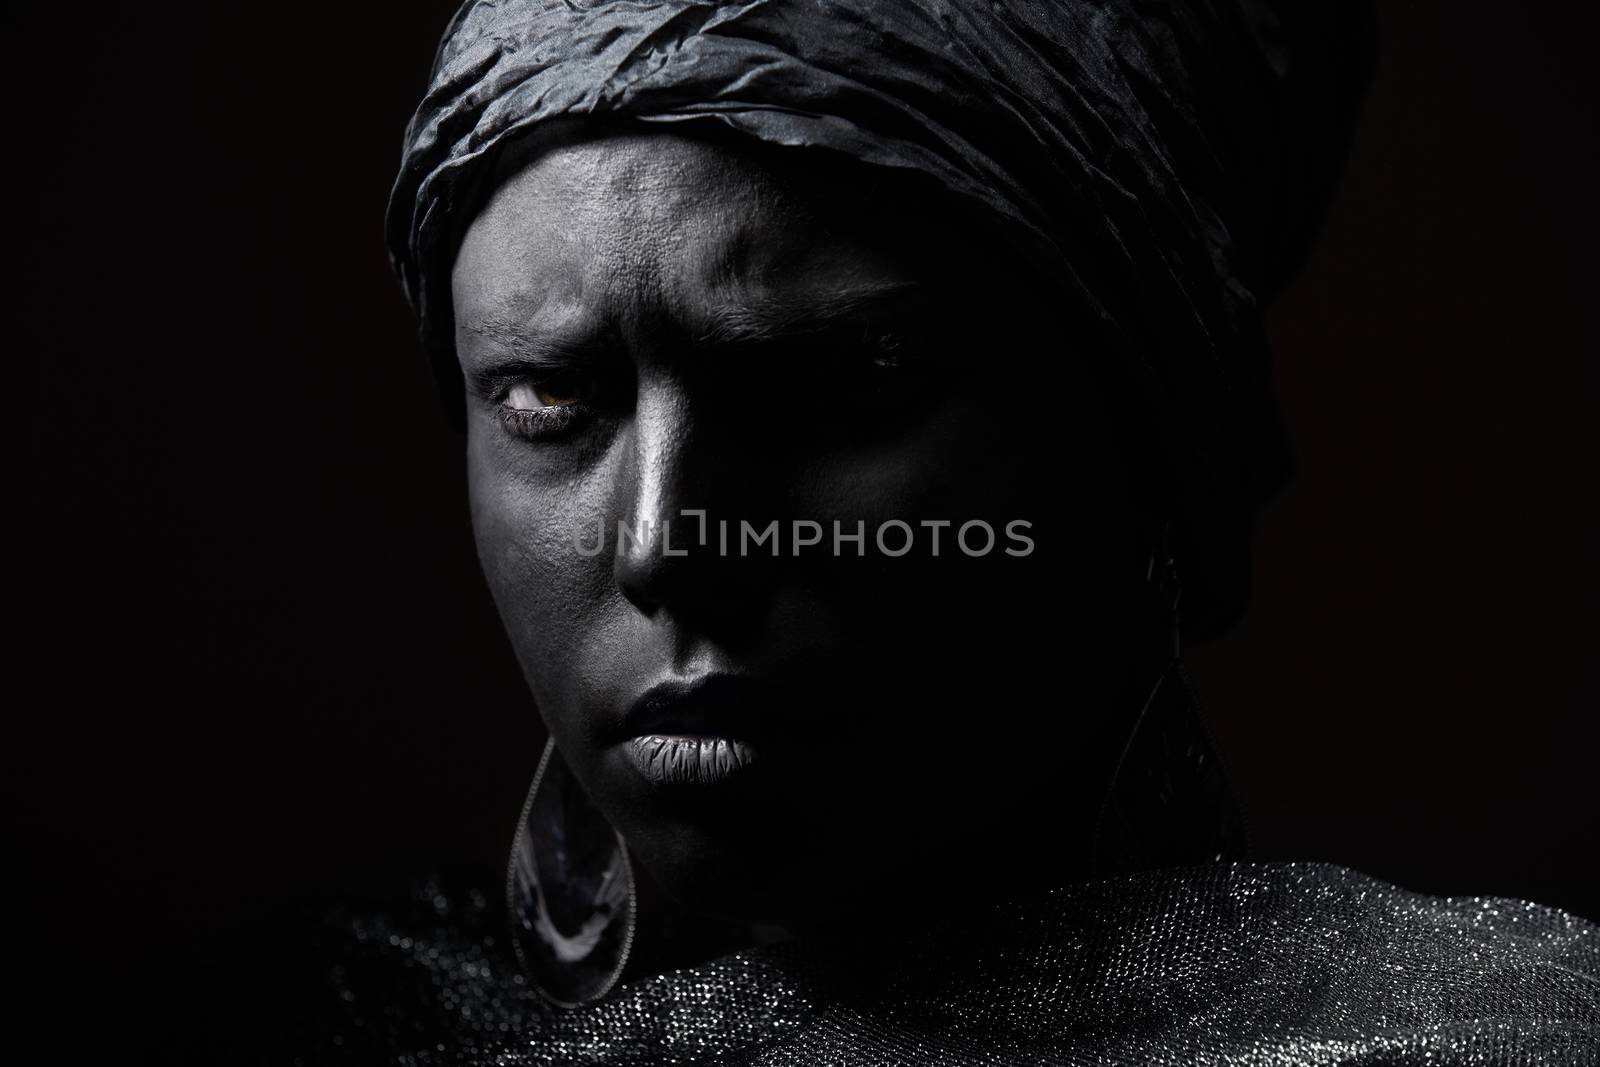 Female African voodoo shaman